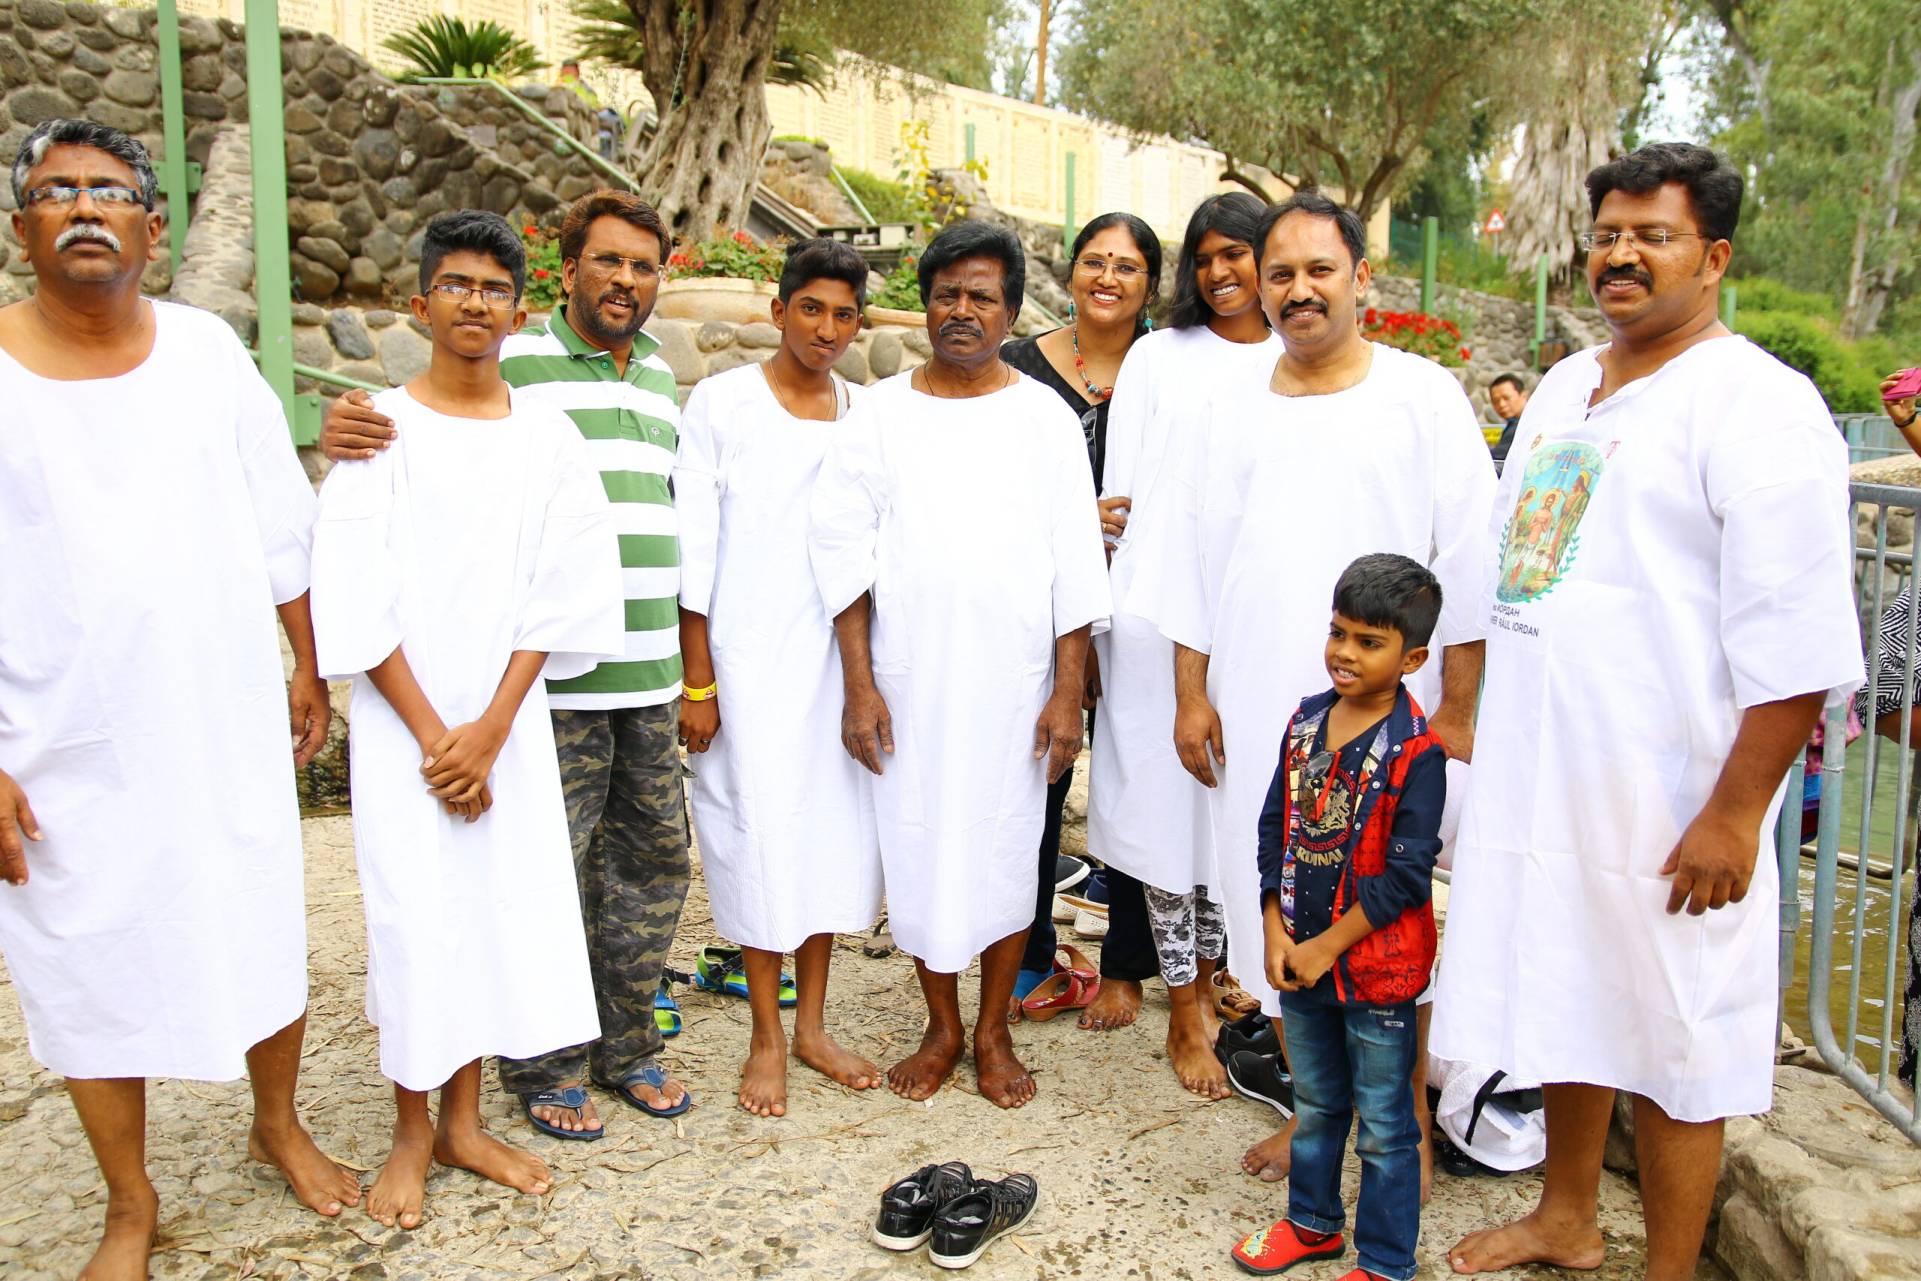 Yardenit Baptism site